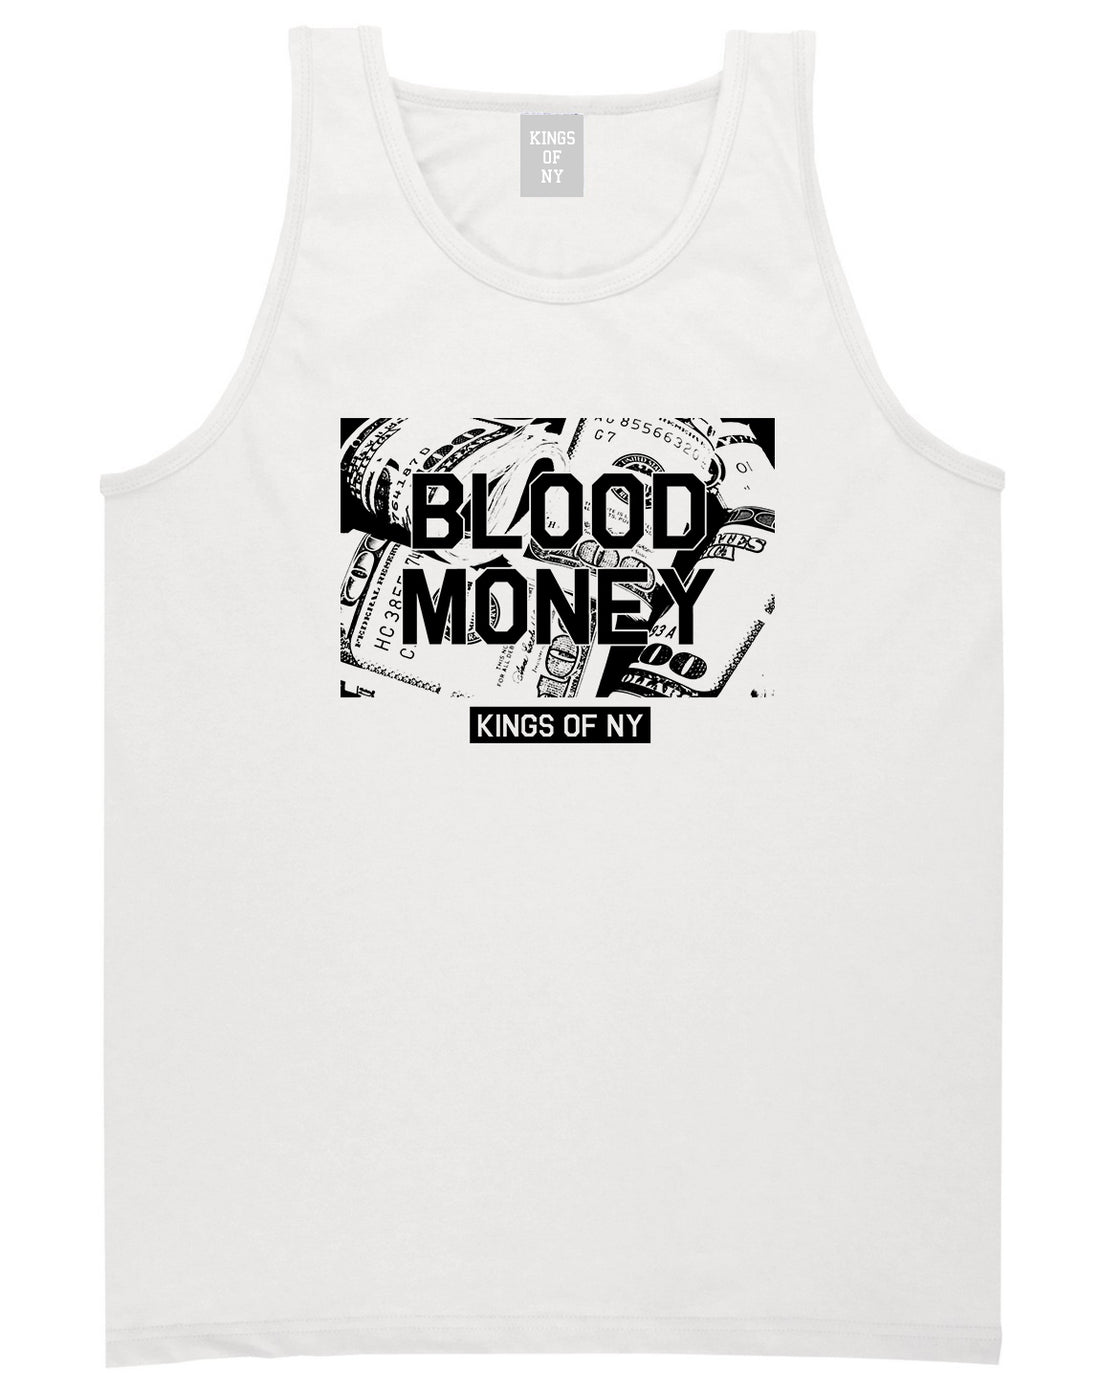 Blood Money 100s Mens Tank Top Shirt White